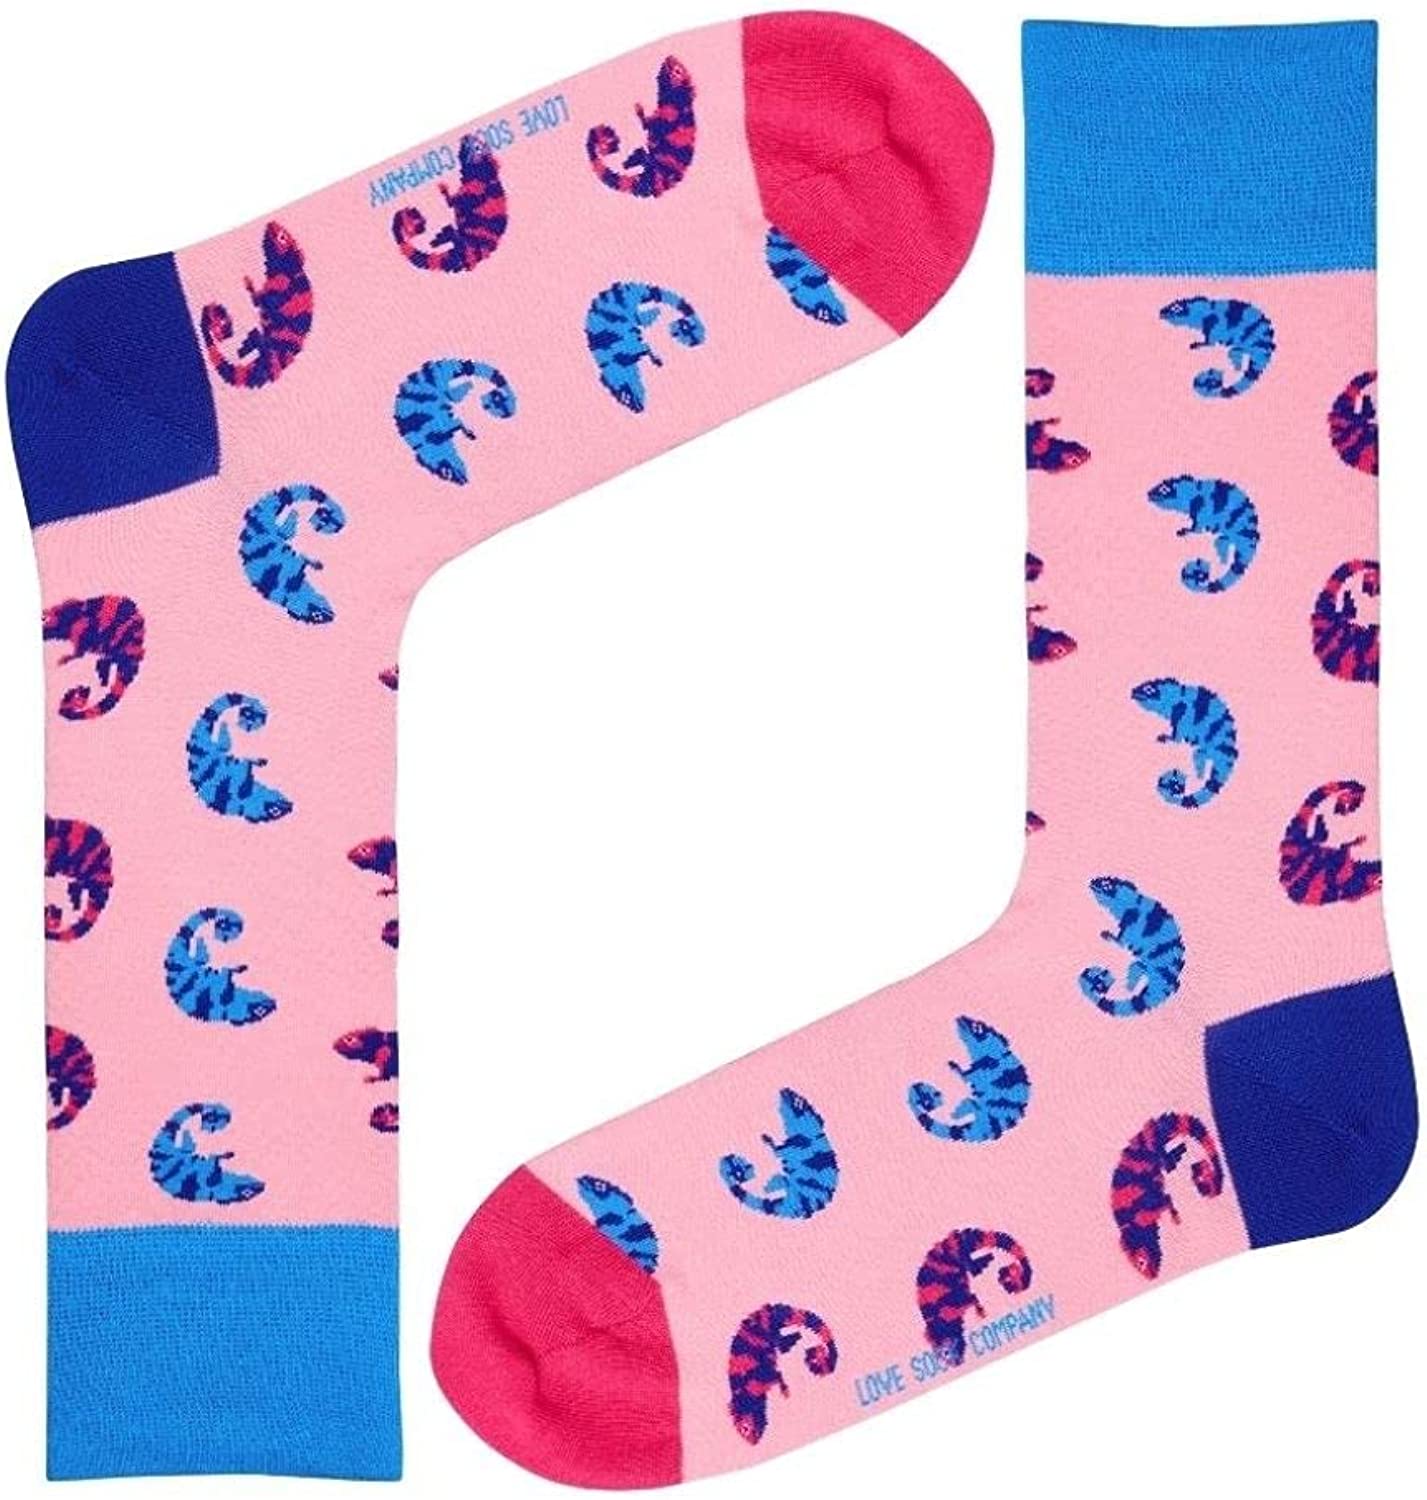 Love Sock Company organic cotton colorful fun novelty crew socks (Chameleon, 6-9, Pink)